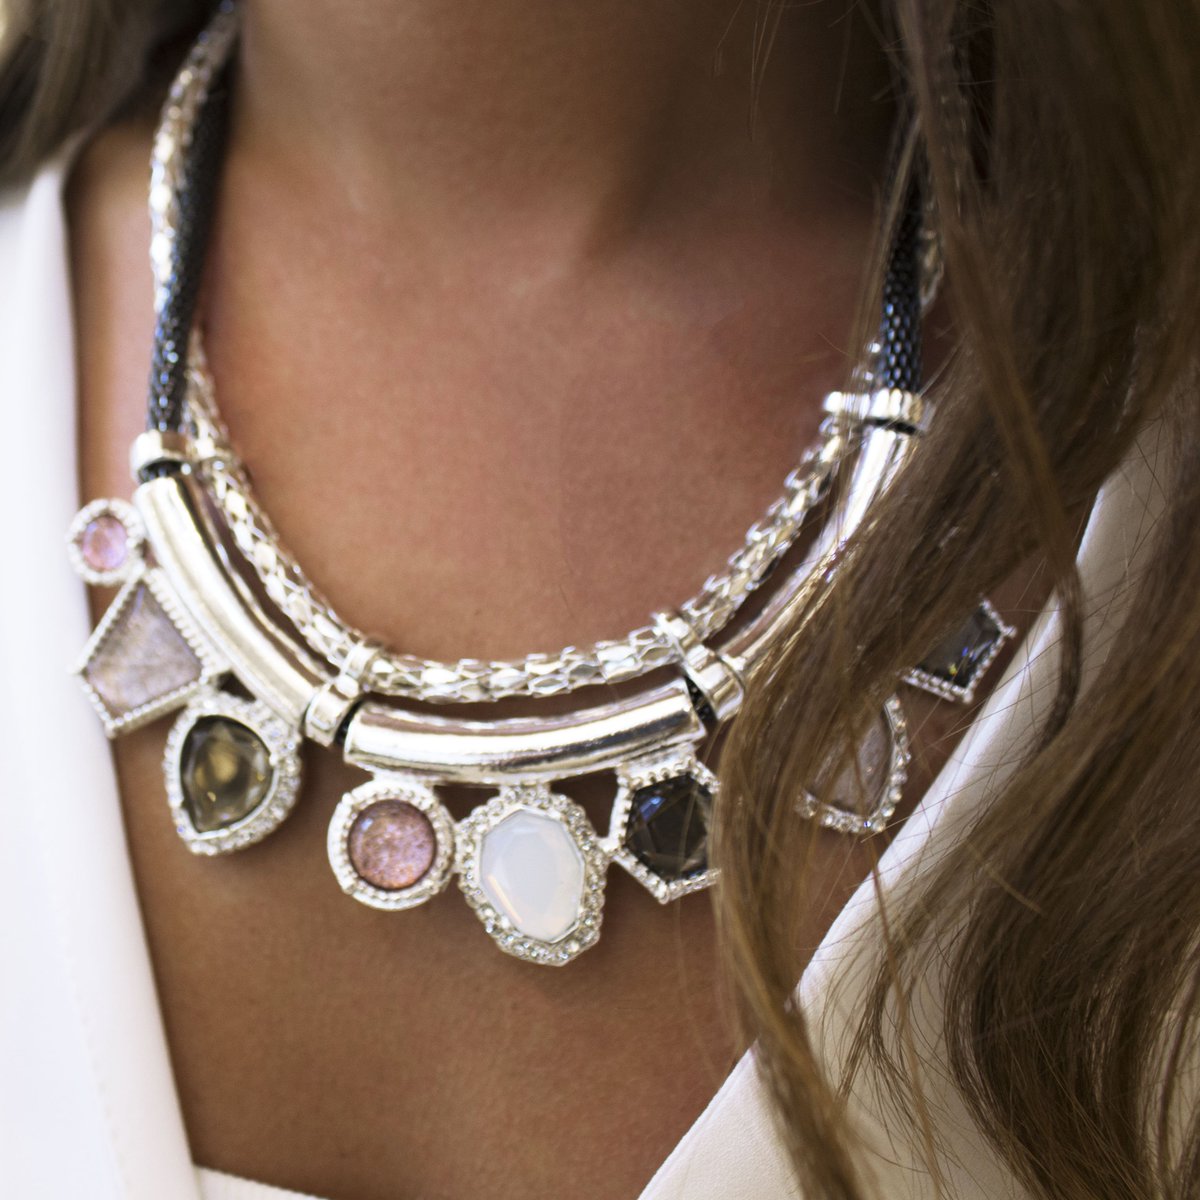 Make a bold statement. Shop my jewelry collection @Kohls now <3 #JLoXKohls https://t.co/E7M1jpIJ5T https://t.co/mYw92BbXtg